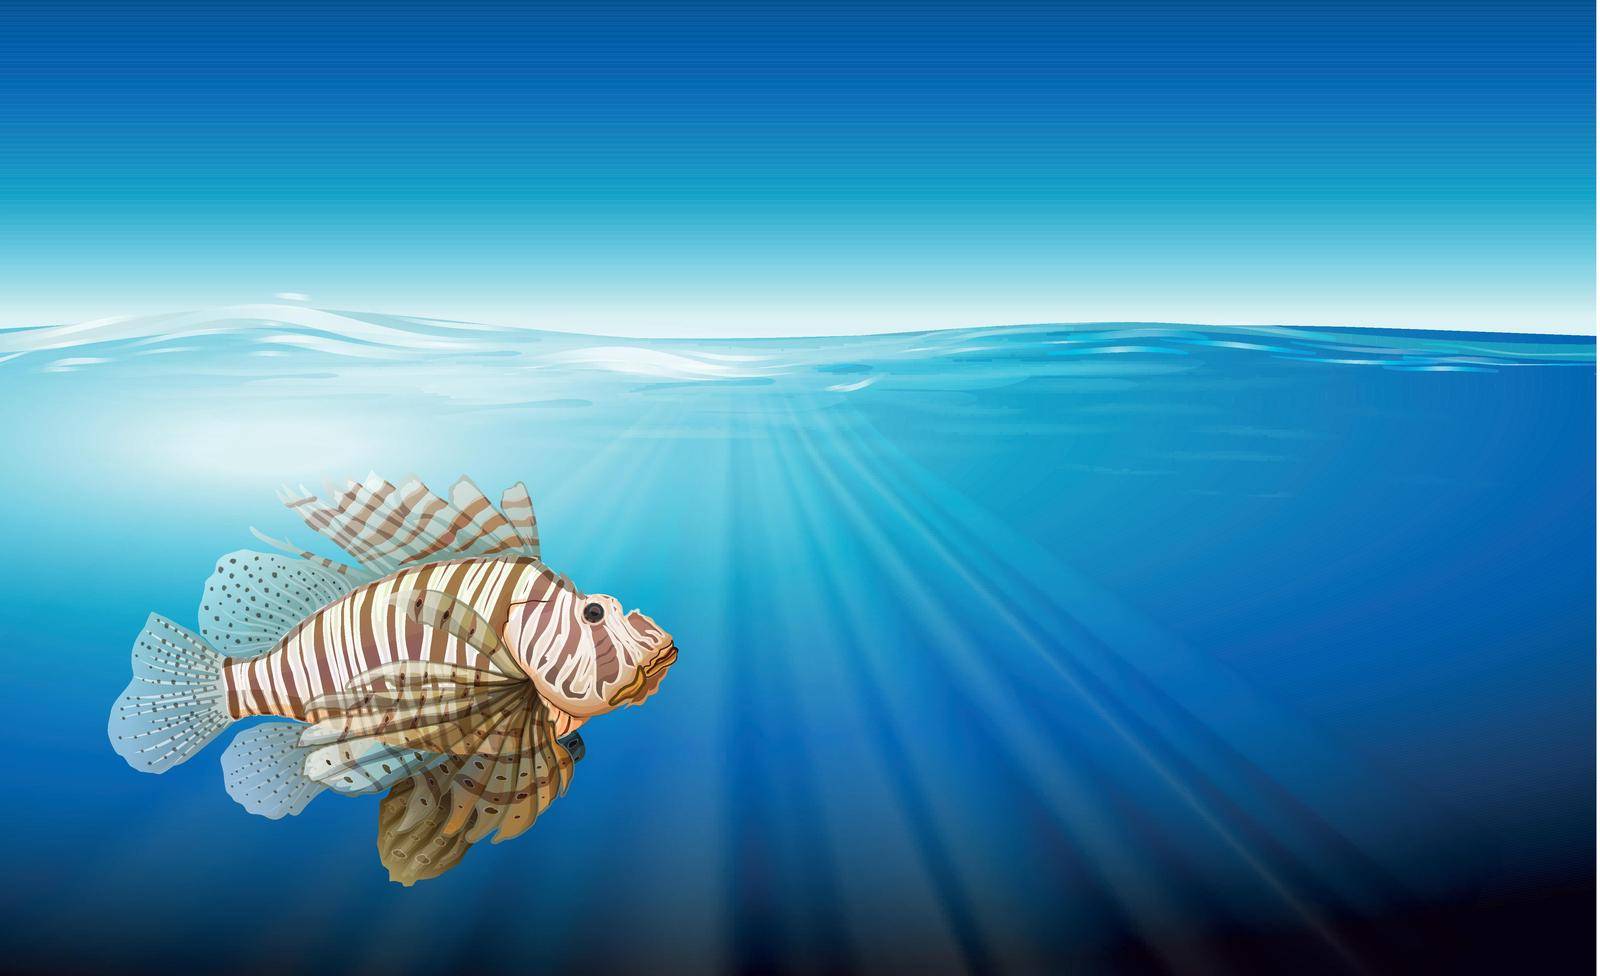 Illustration showing the lionfish